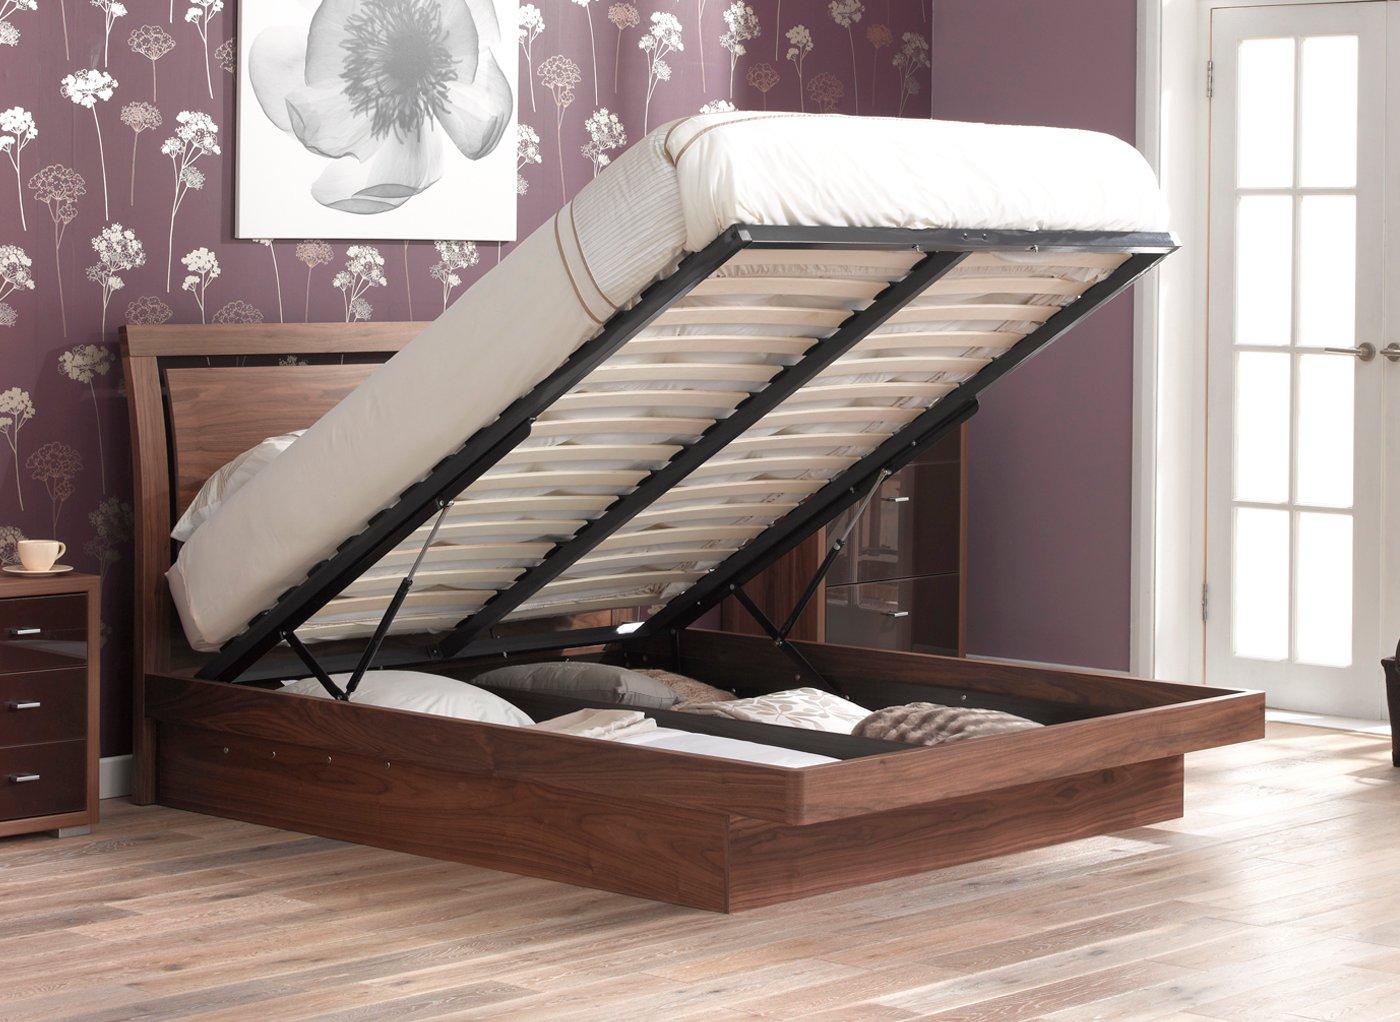 ottoman bed frame and mattress